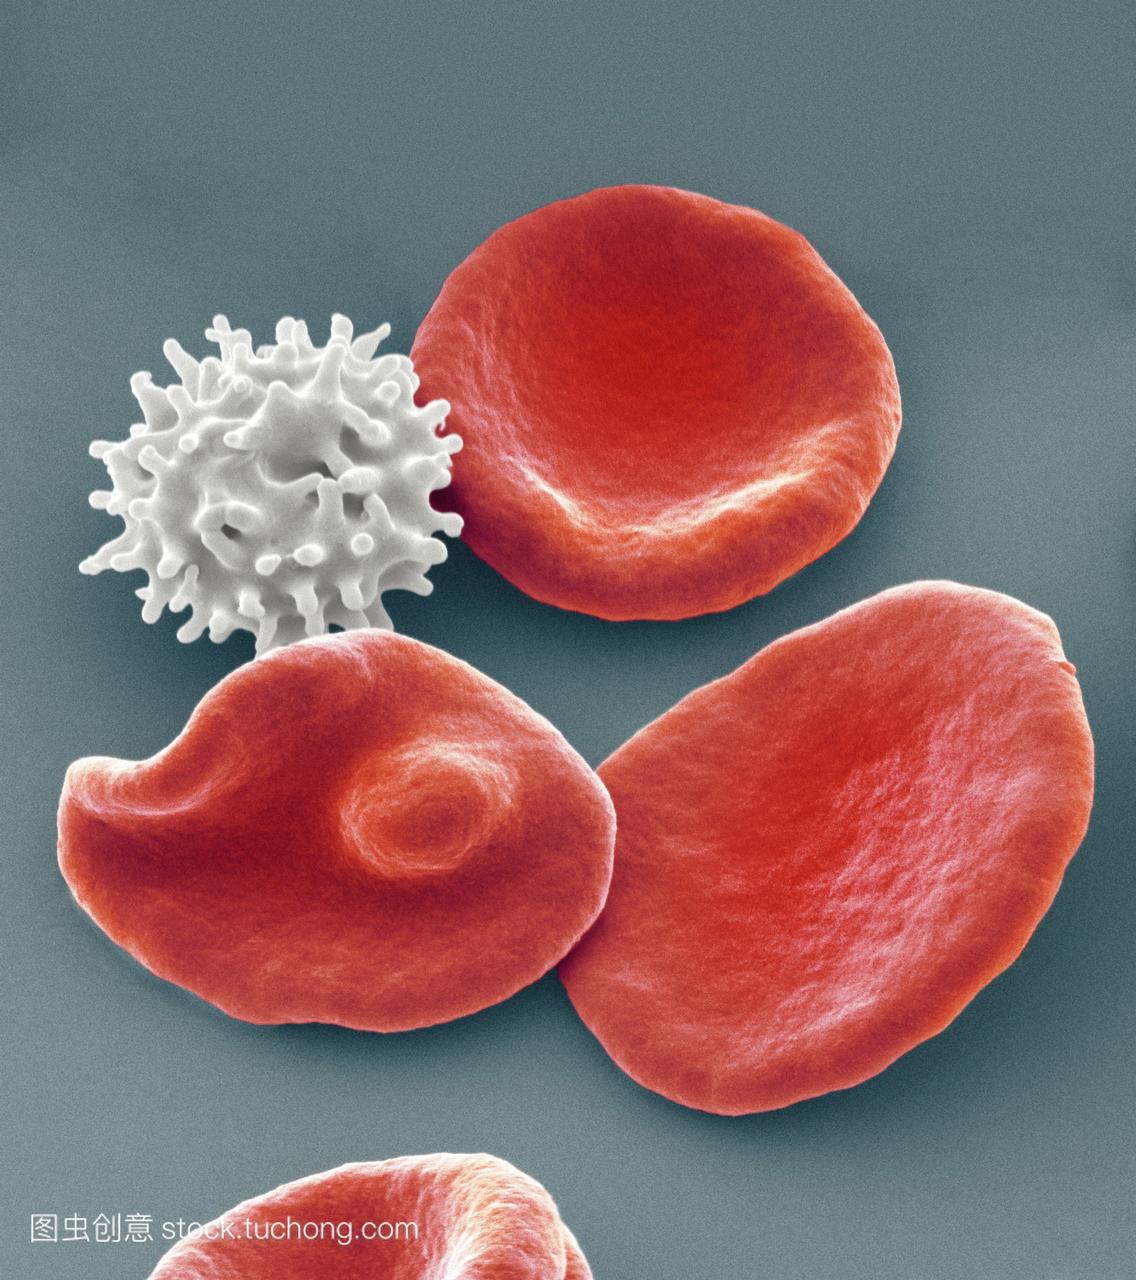 红细胞。正常健康红细胞红色和crenated血红细